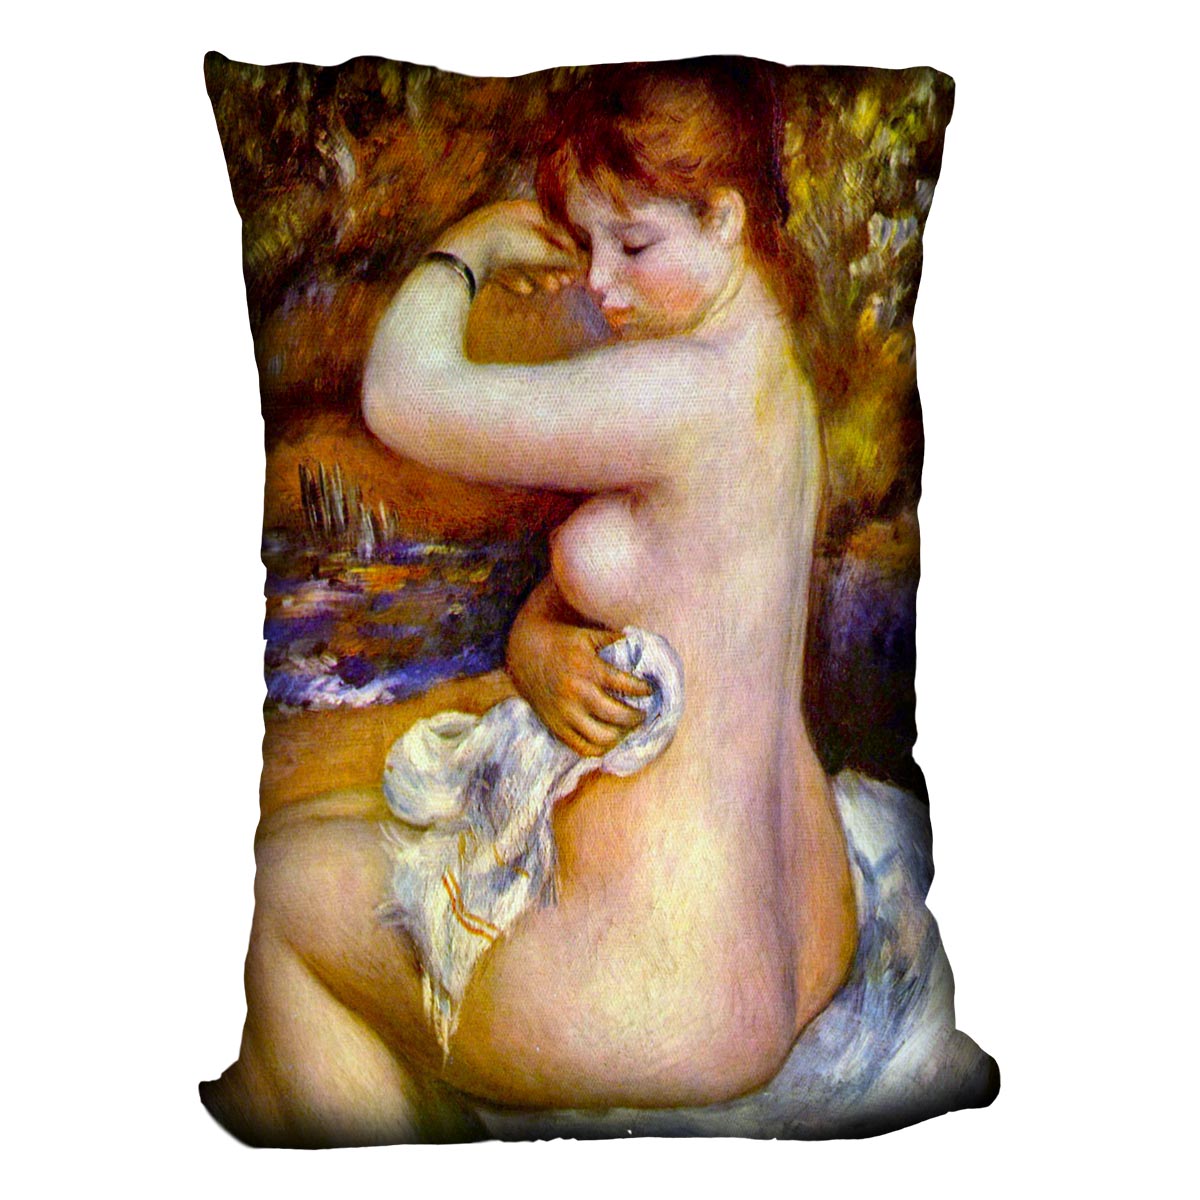 After the bath by Renoir Cushion